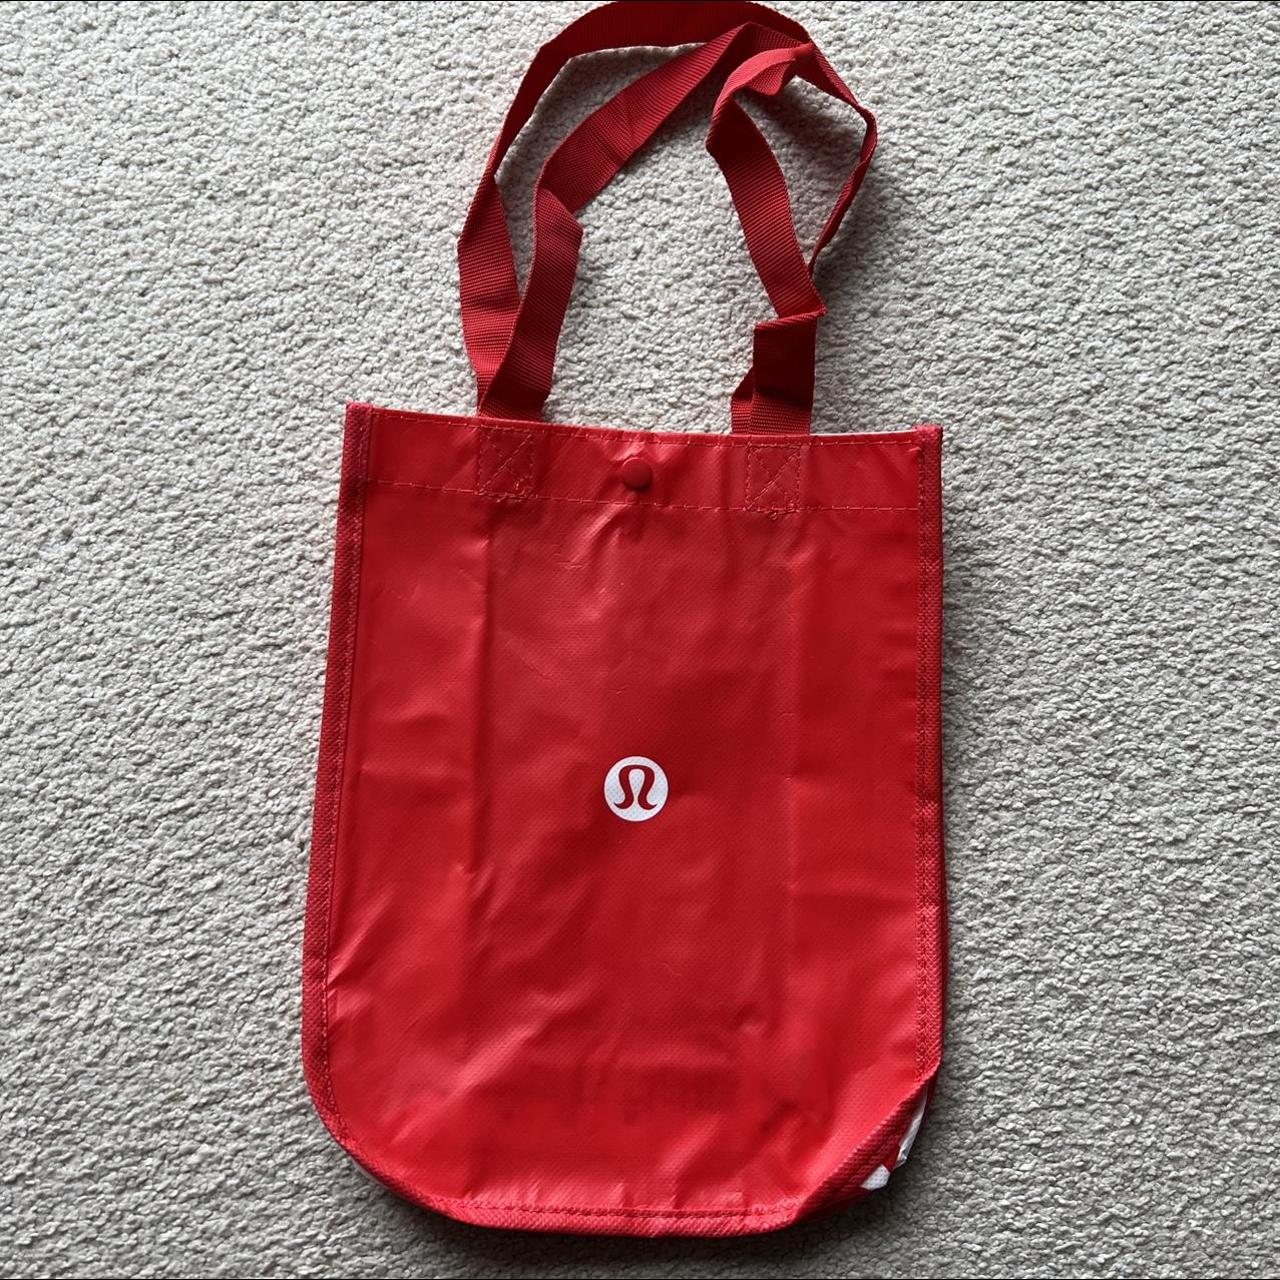 Lululemon Shopping Tote Bag Set Of (1 Medium And Depop, 43% OFF